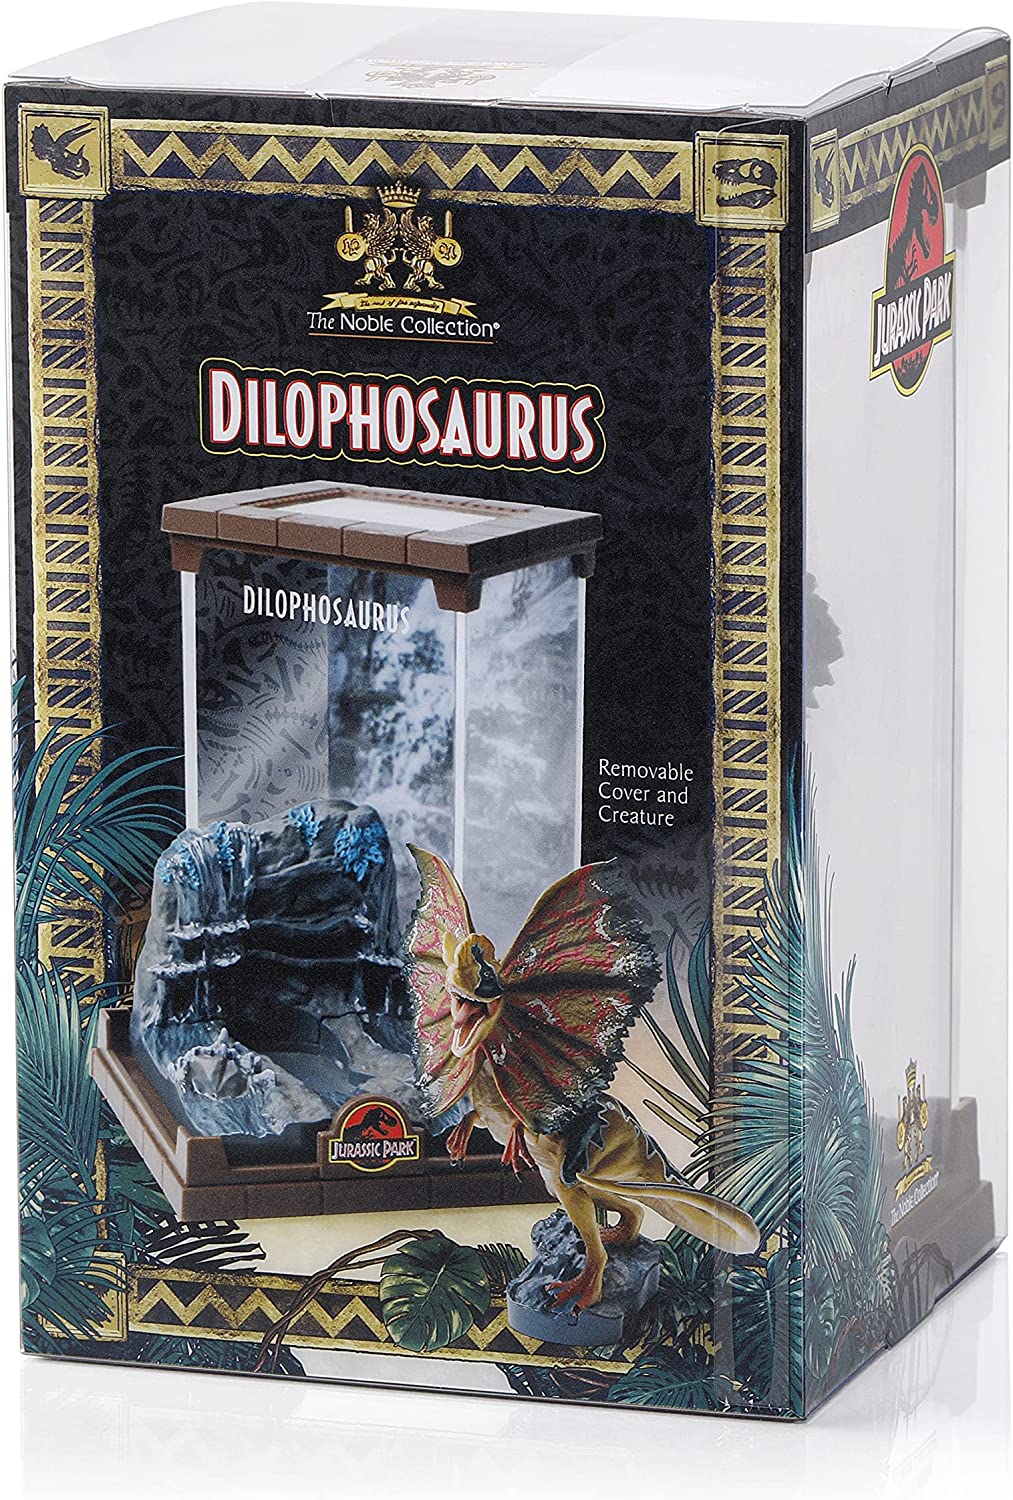 Jurassic Park Creature Diorama - Dilophosaurus